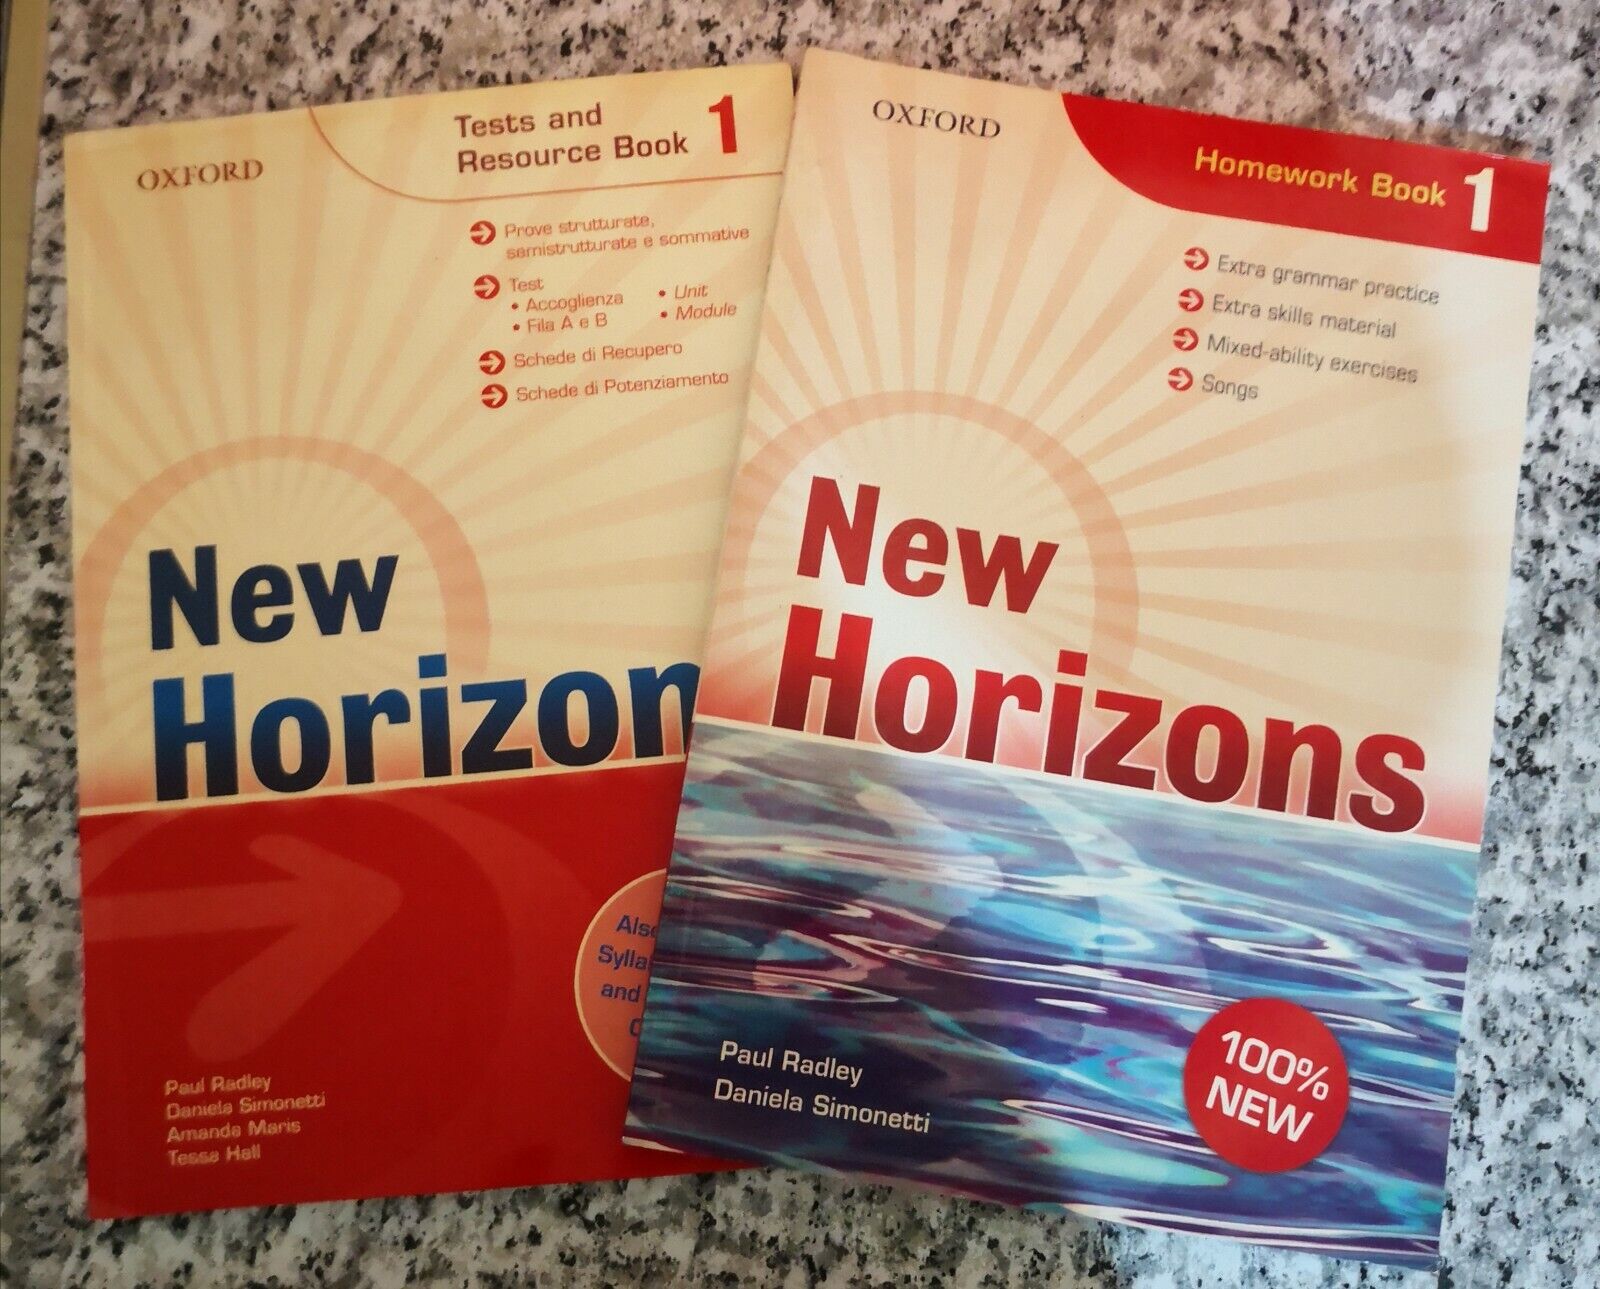  New Horizons 2 volumi  di Paul Radley Daniela Simonetti,  2000,  Oxford Un. -F